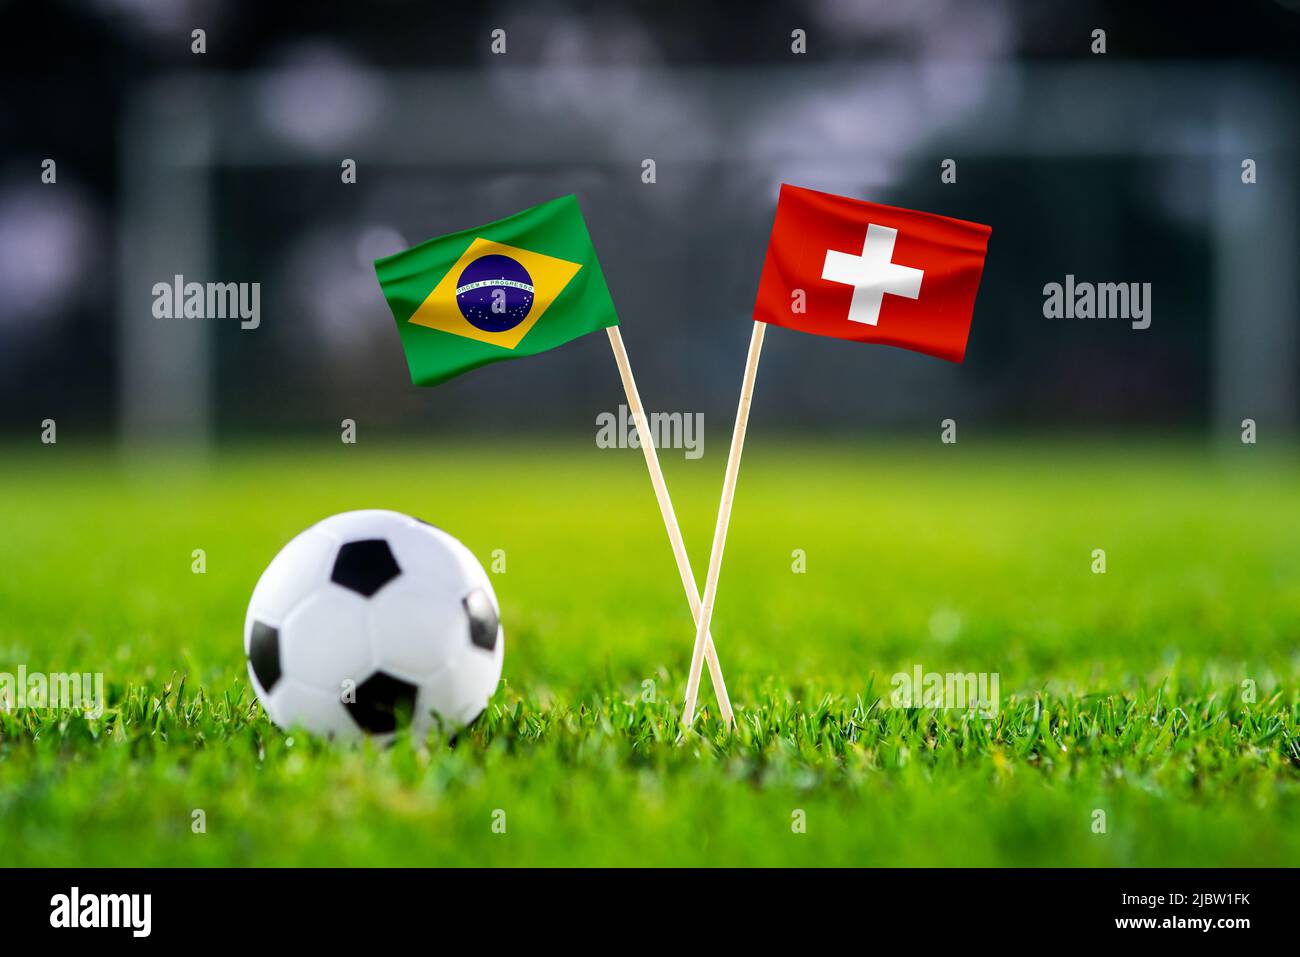 Brazil vs. Switzerland, Stadium 974, Football match wallpaper, Handmade national flags and soccer ball on green grass. Football stadium in background. Stock Photo